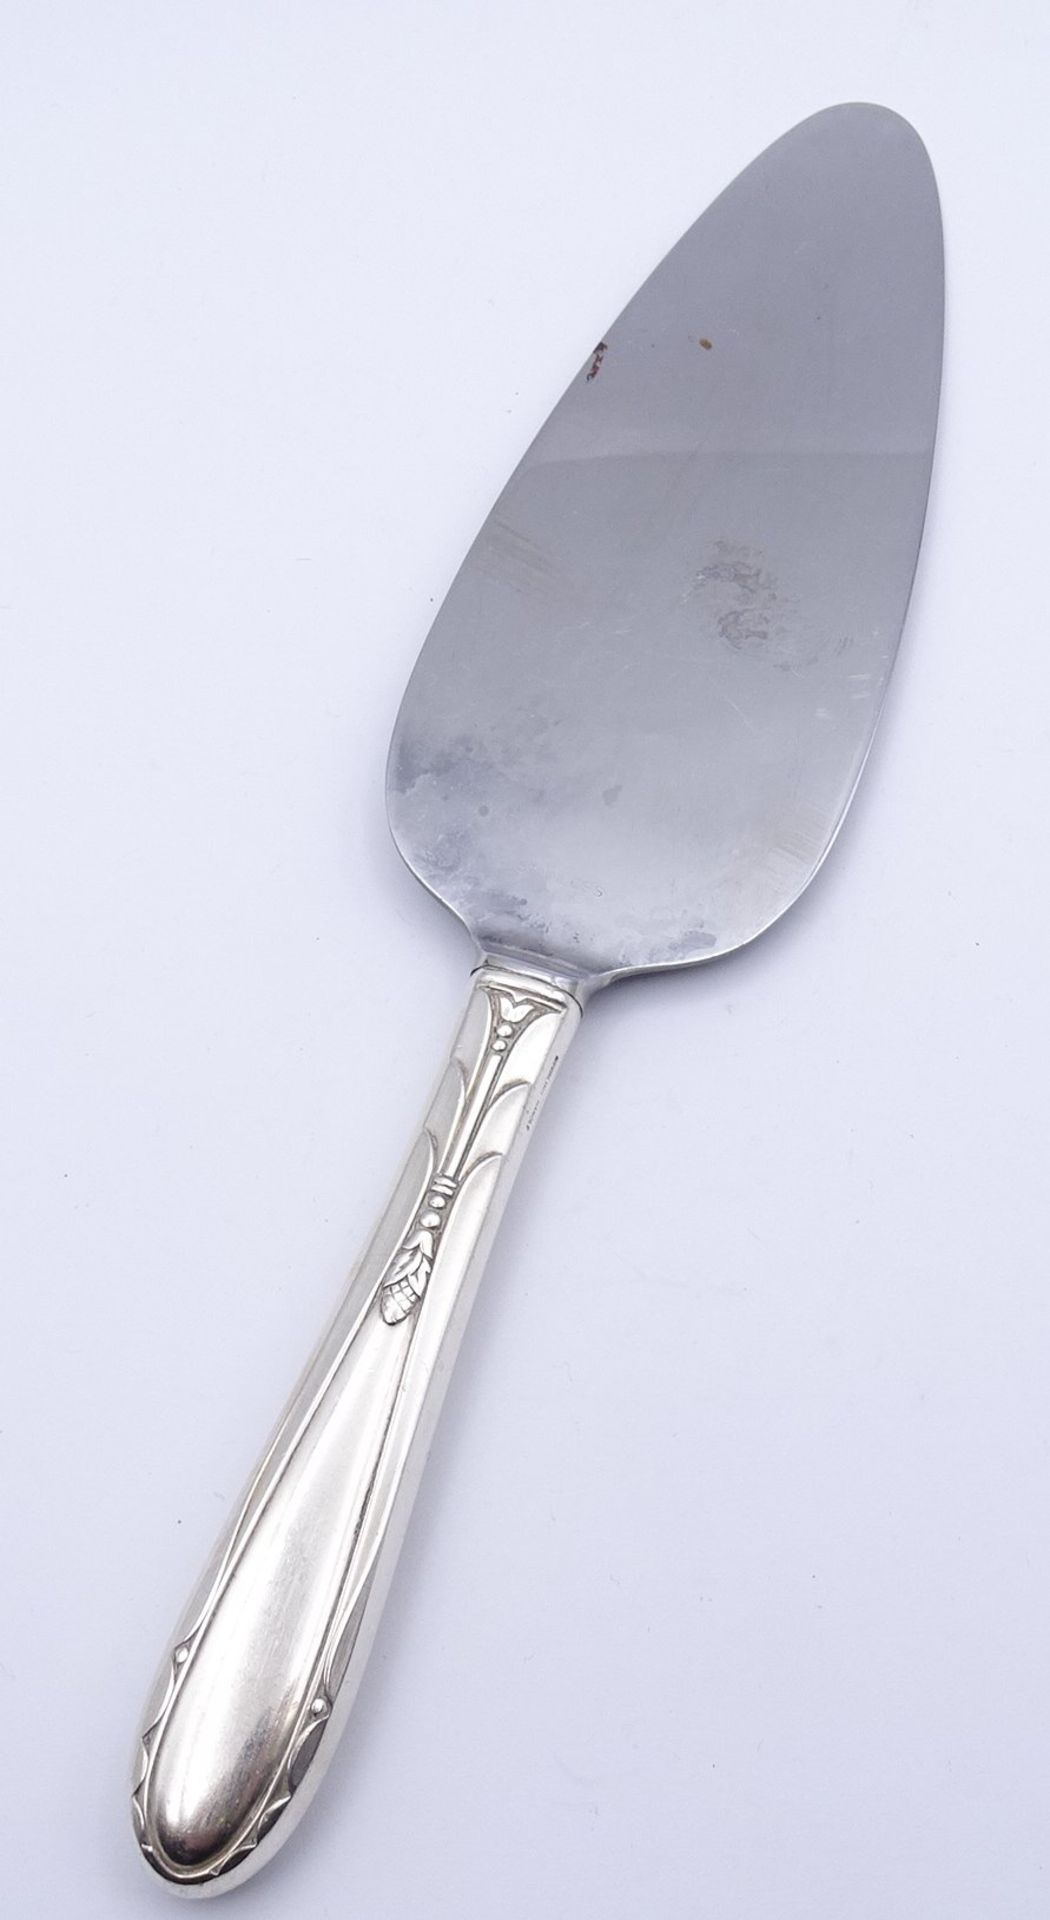 Kuchenheber mit Sterling Silber Griff, L. 25cm - Image 3 of 3